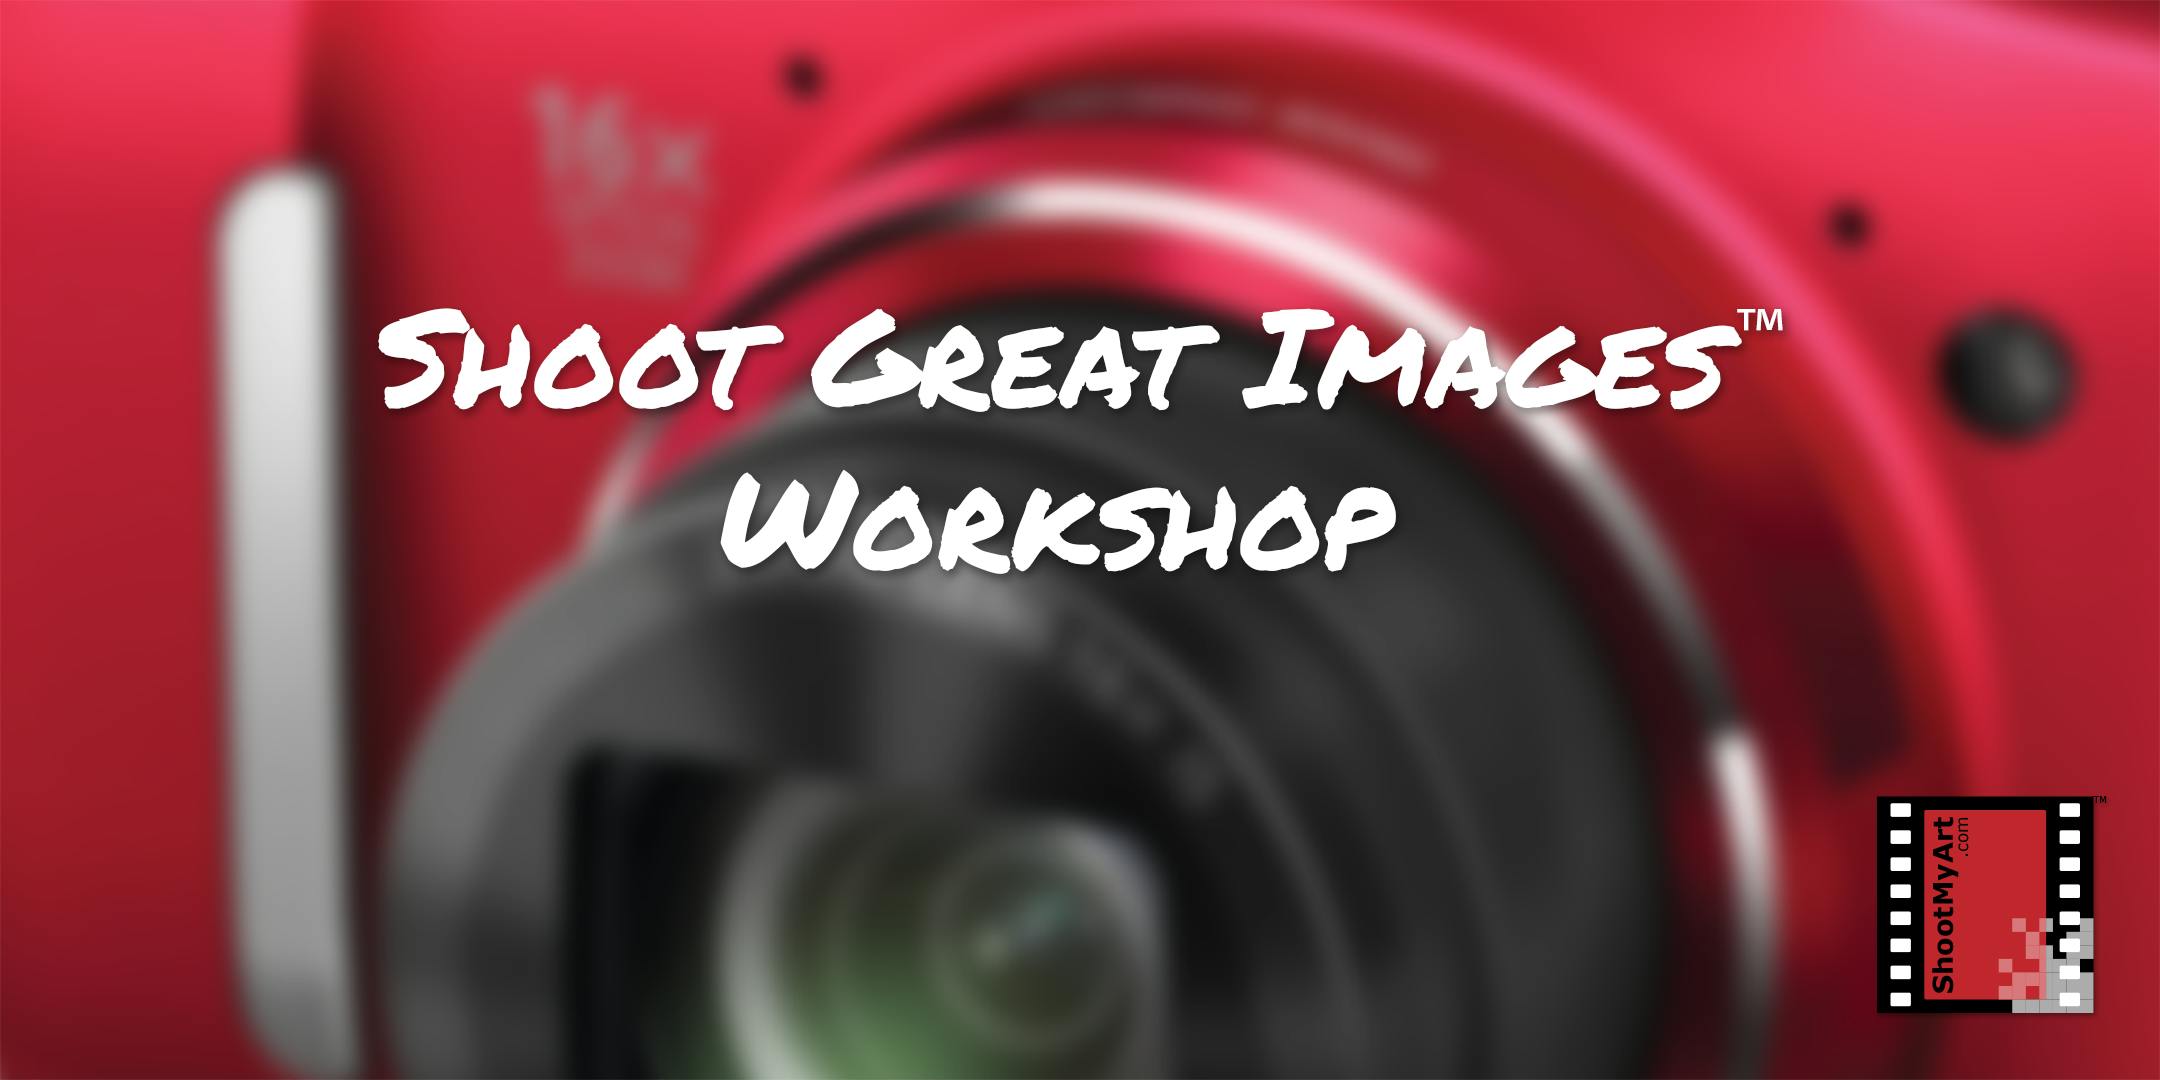 Shoot Great Images™ Workshop